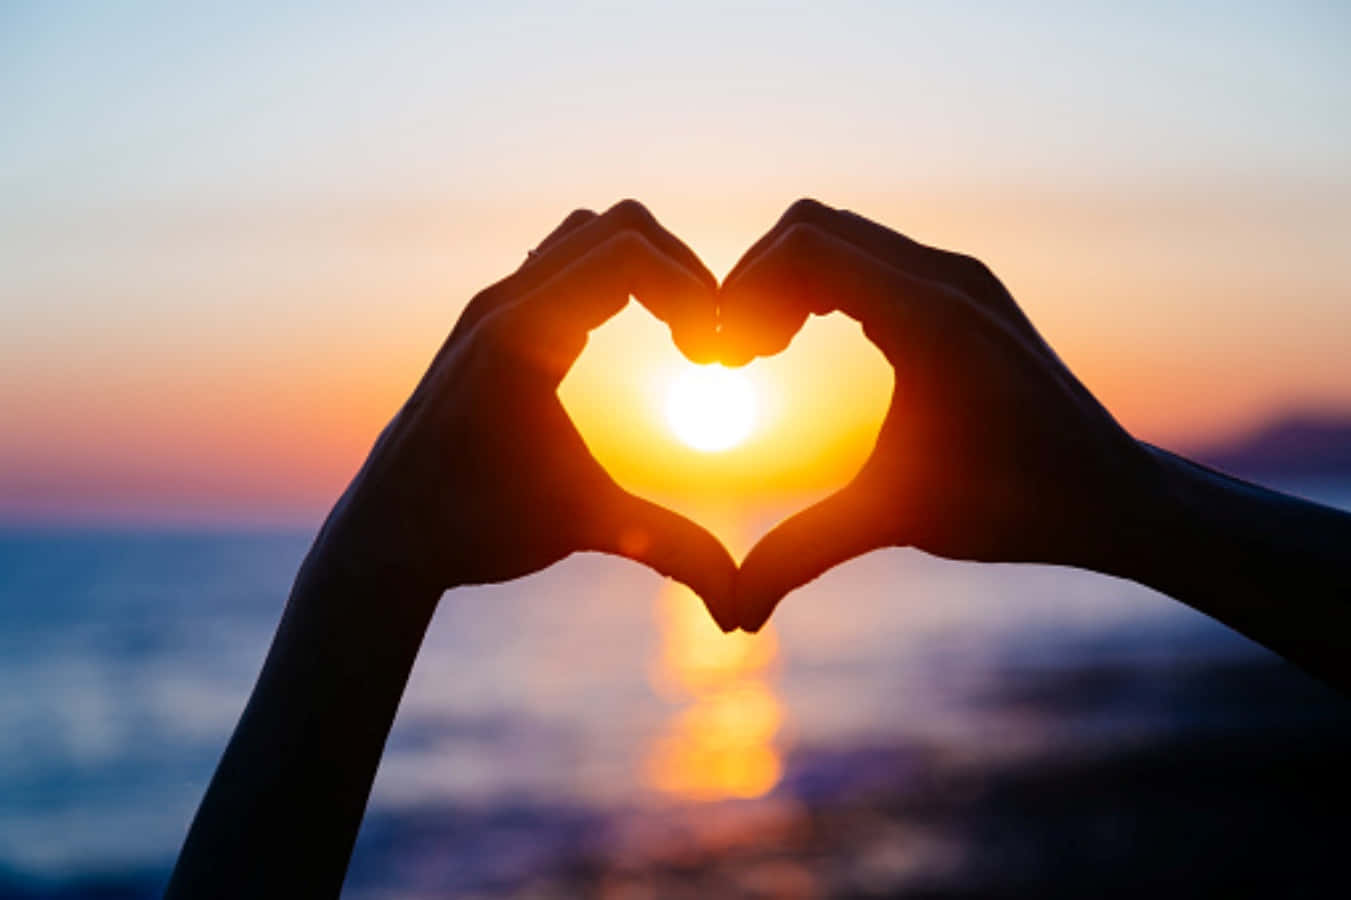 Romantic Heart Silhouette at Sunset Wallpaper